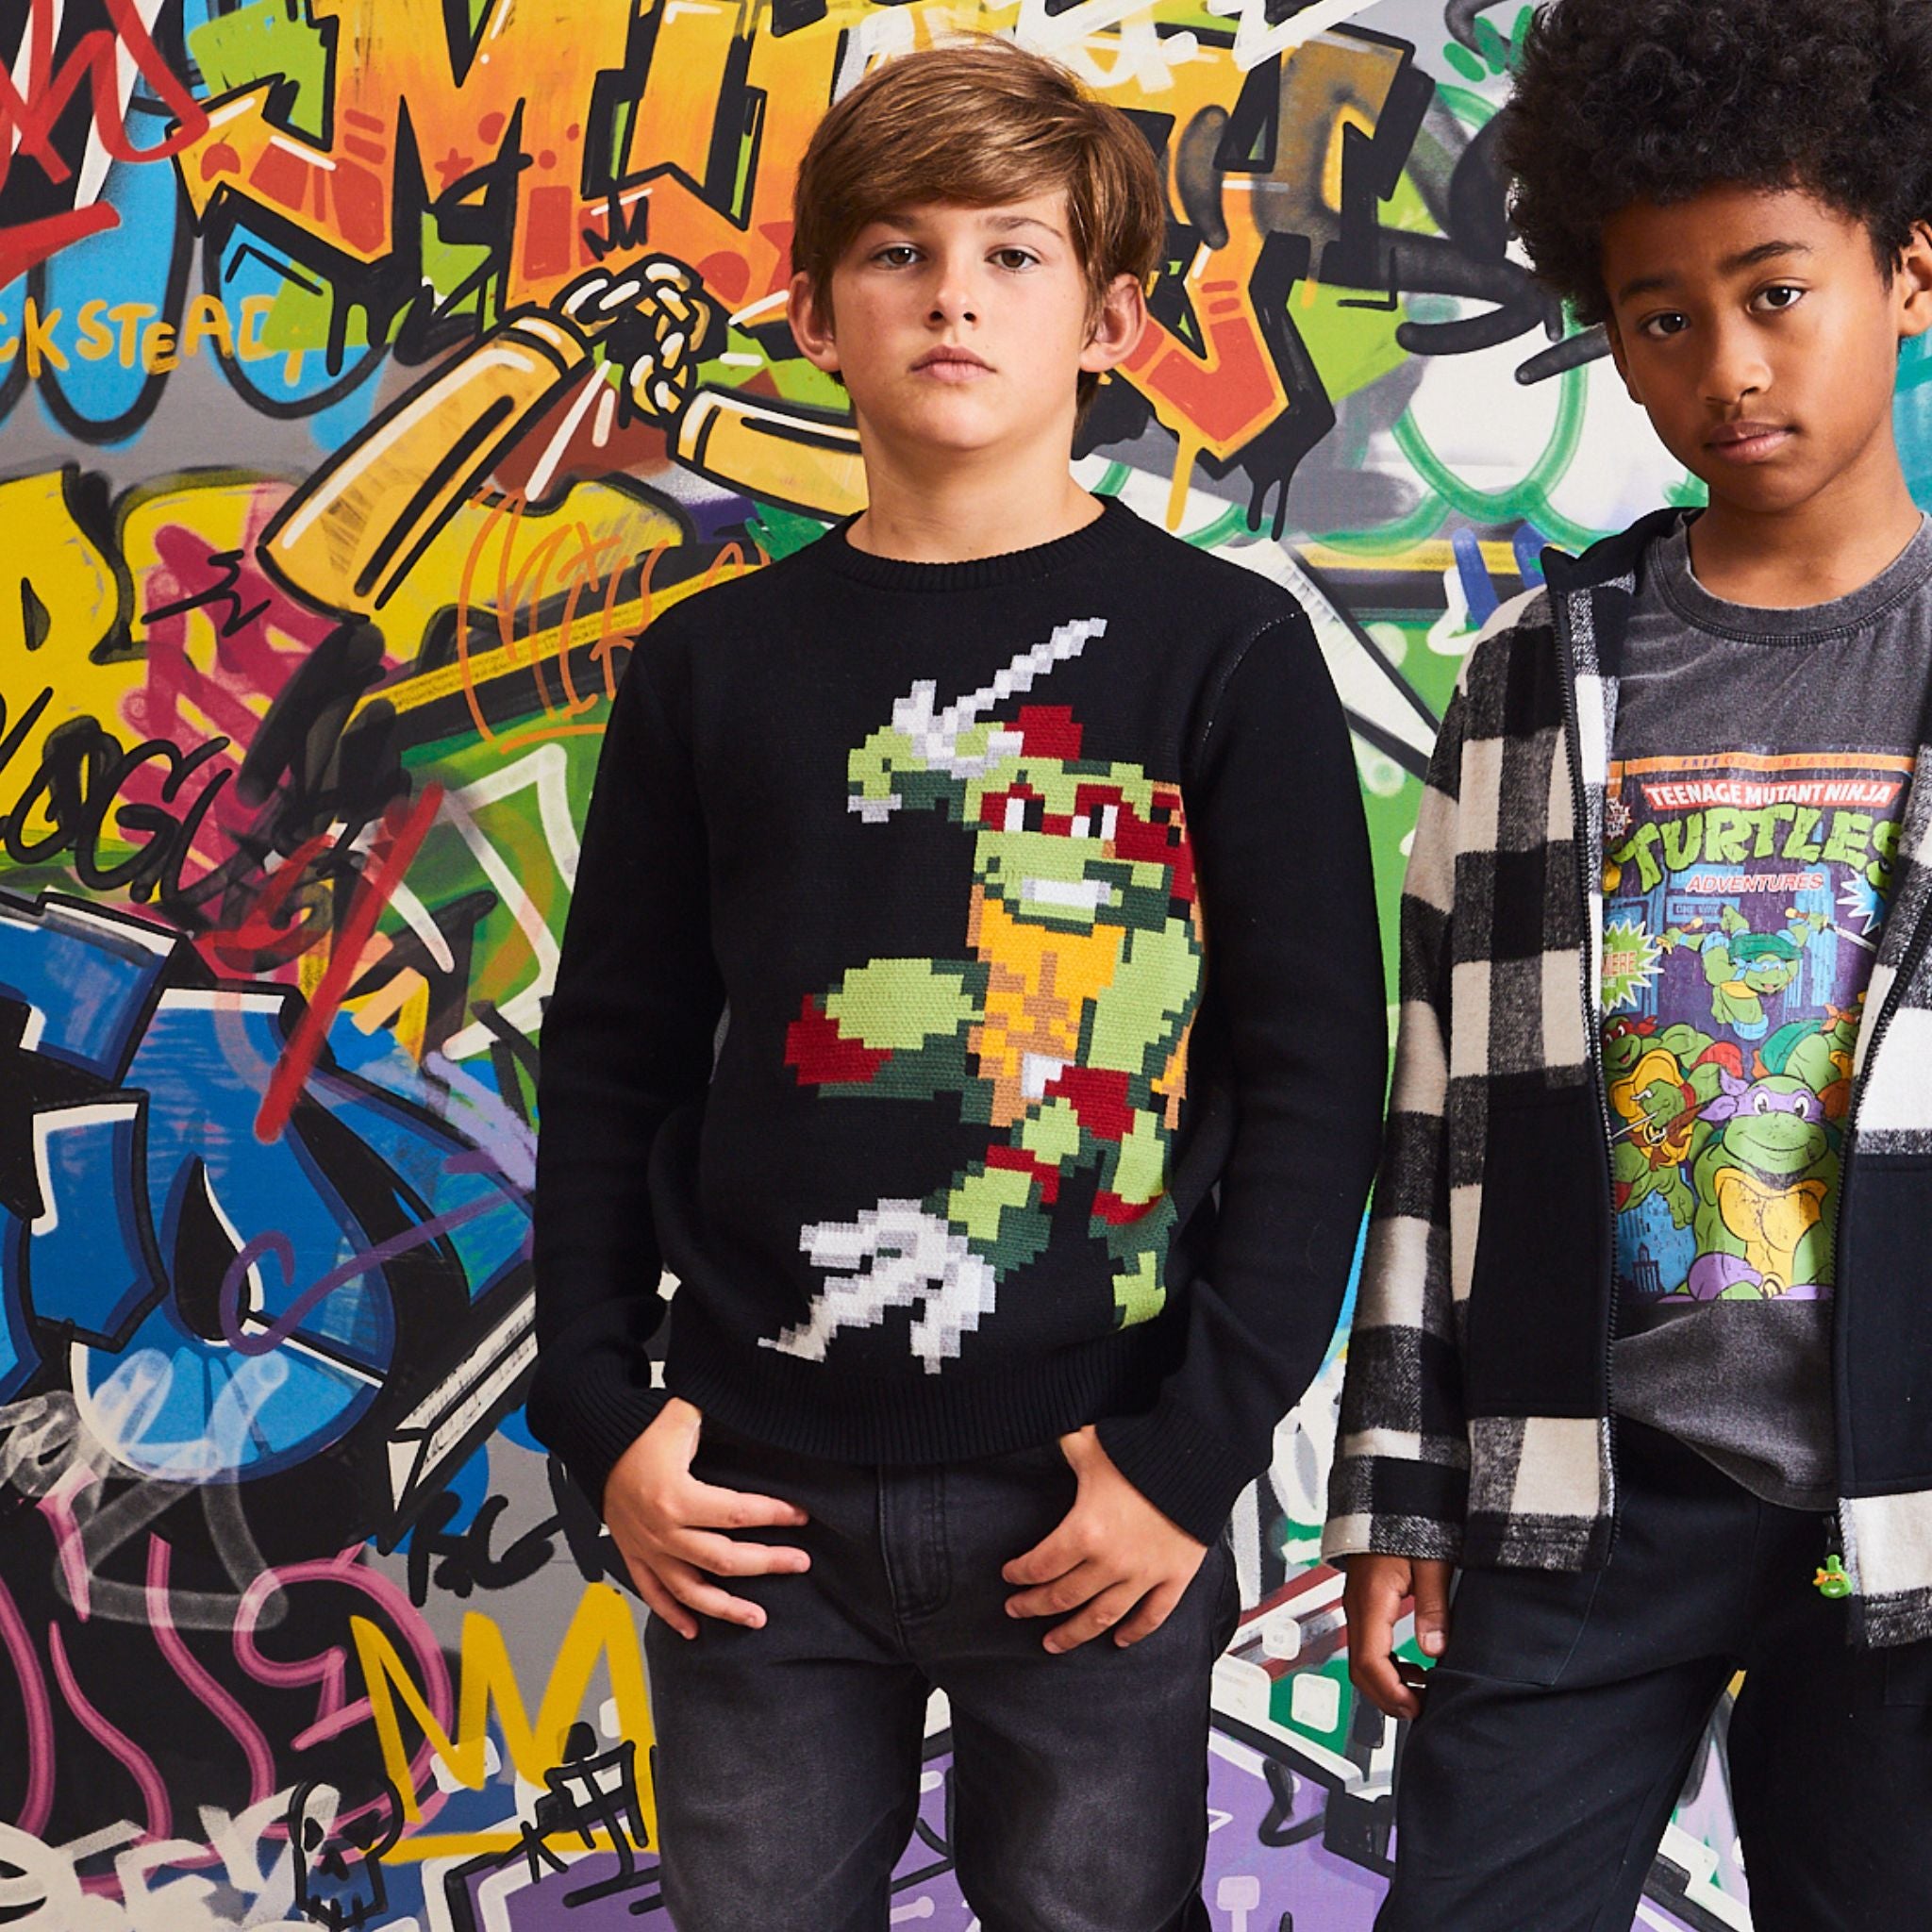 Teenage Mutant Ninja Turtles Toddler Boys 3 Pack Graphic T-shirts Multicolored 3T